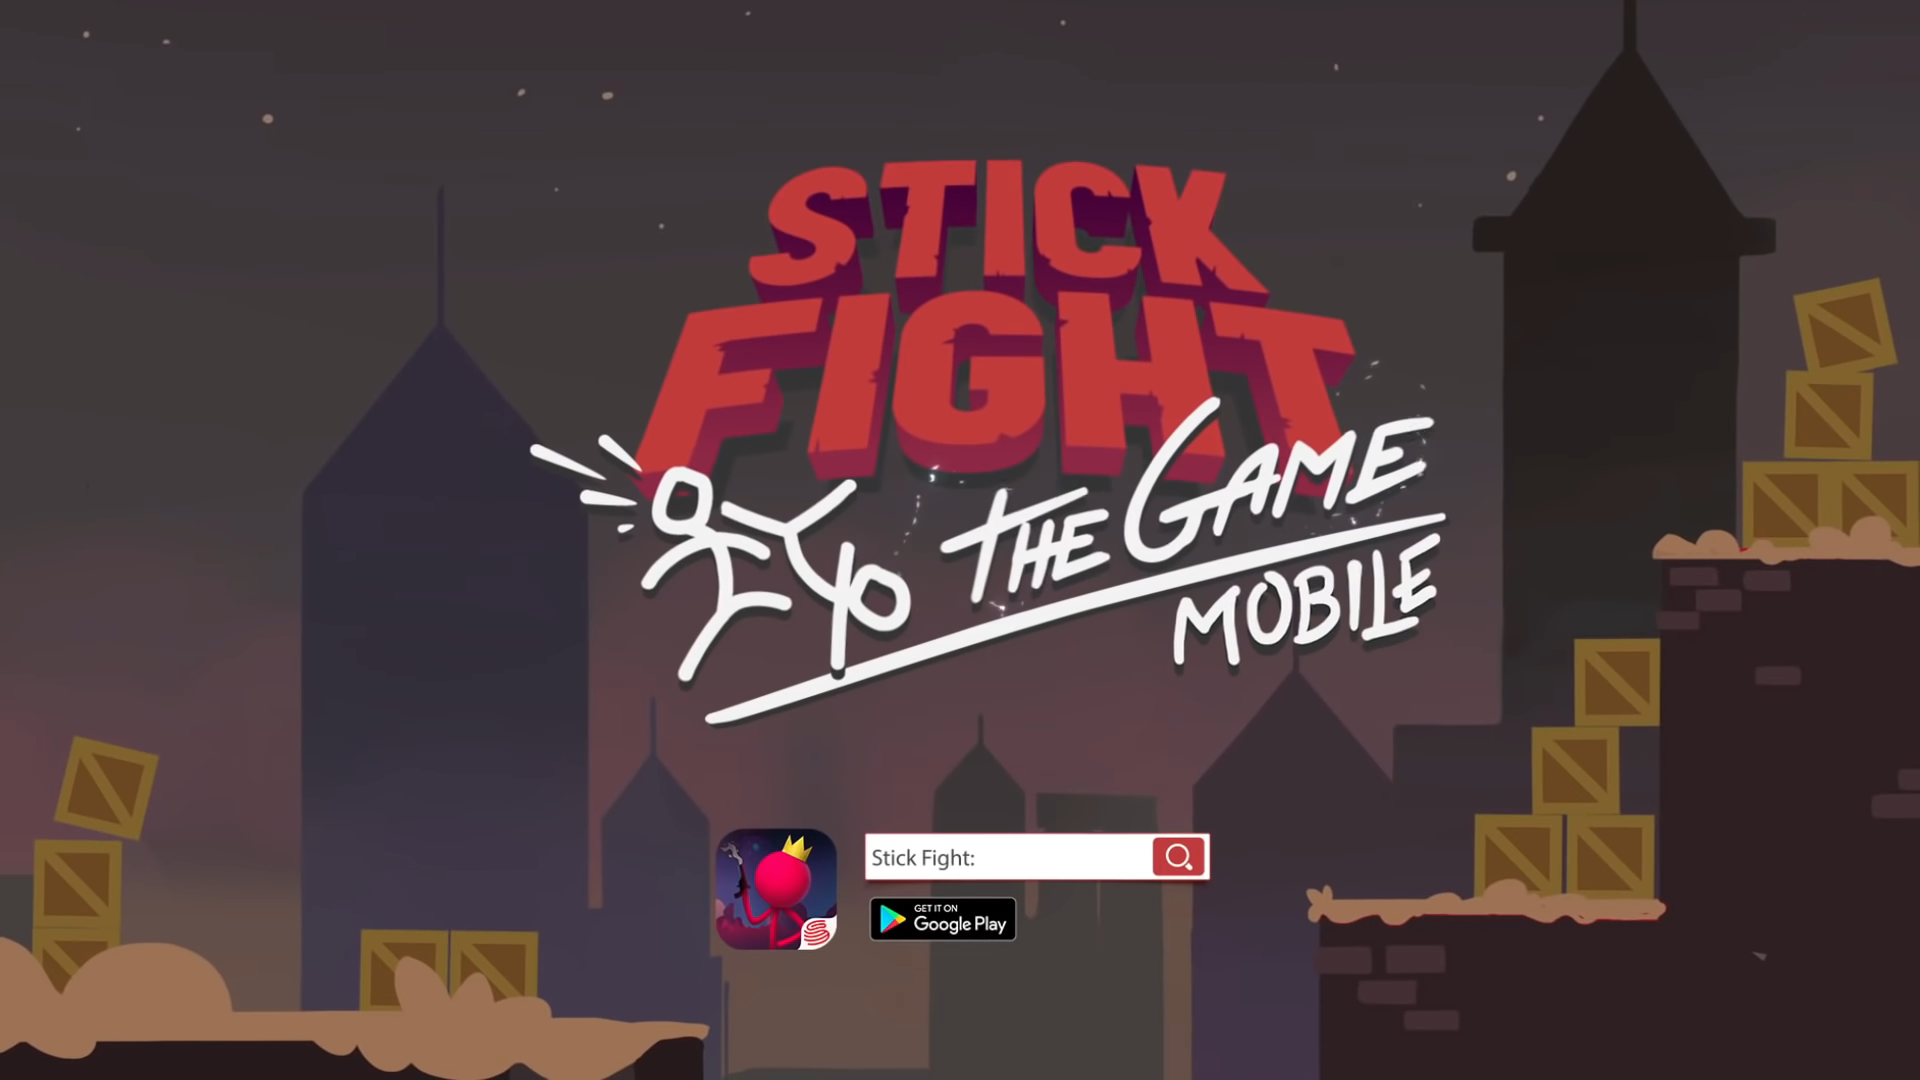 Бесплатная игра стик. Стик файт. Stick Fight: the game. Stickfightthegame. Stick Fight: the game mobile.